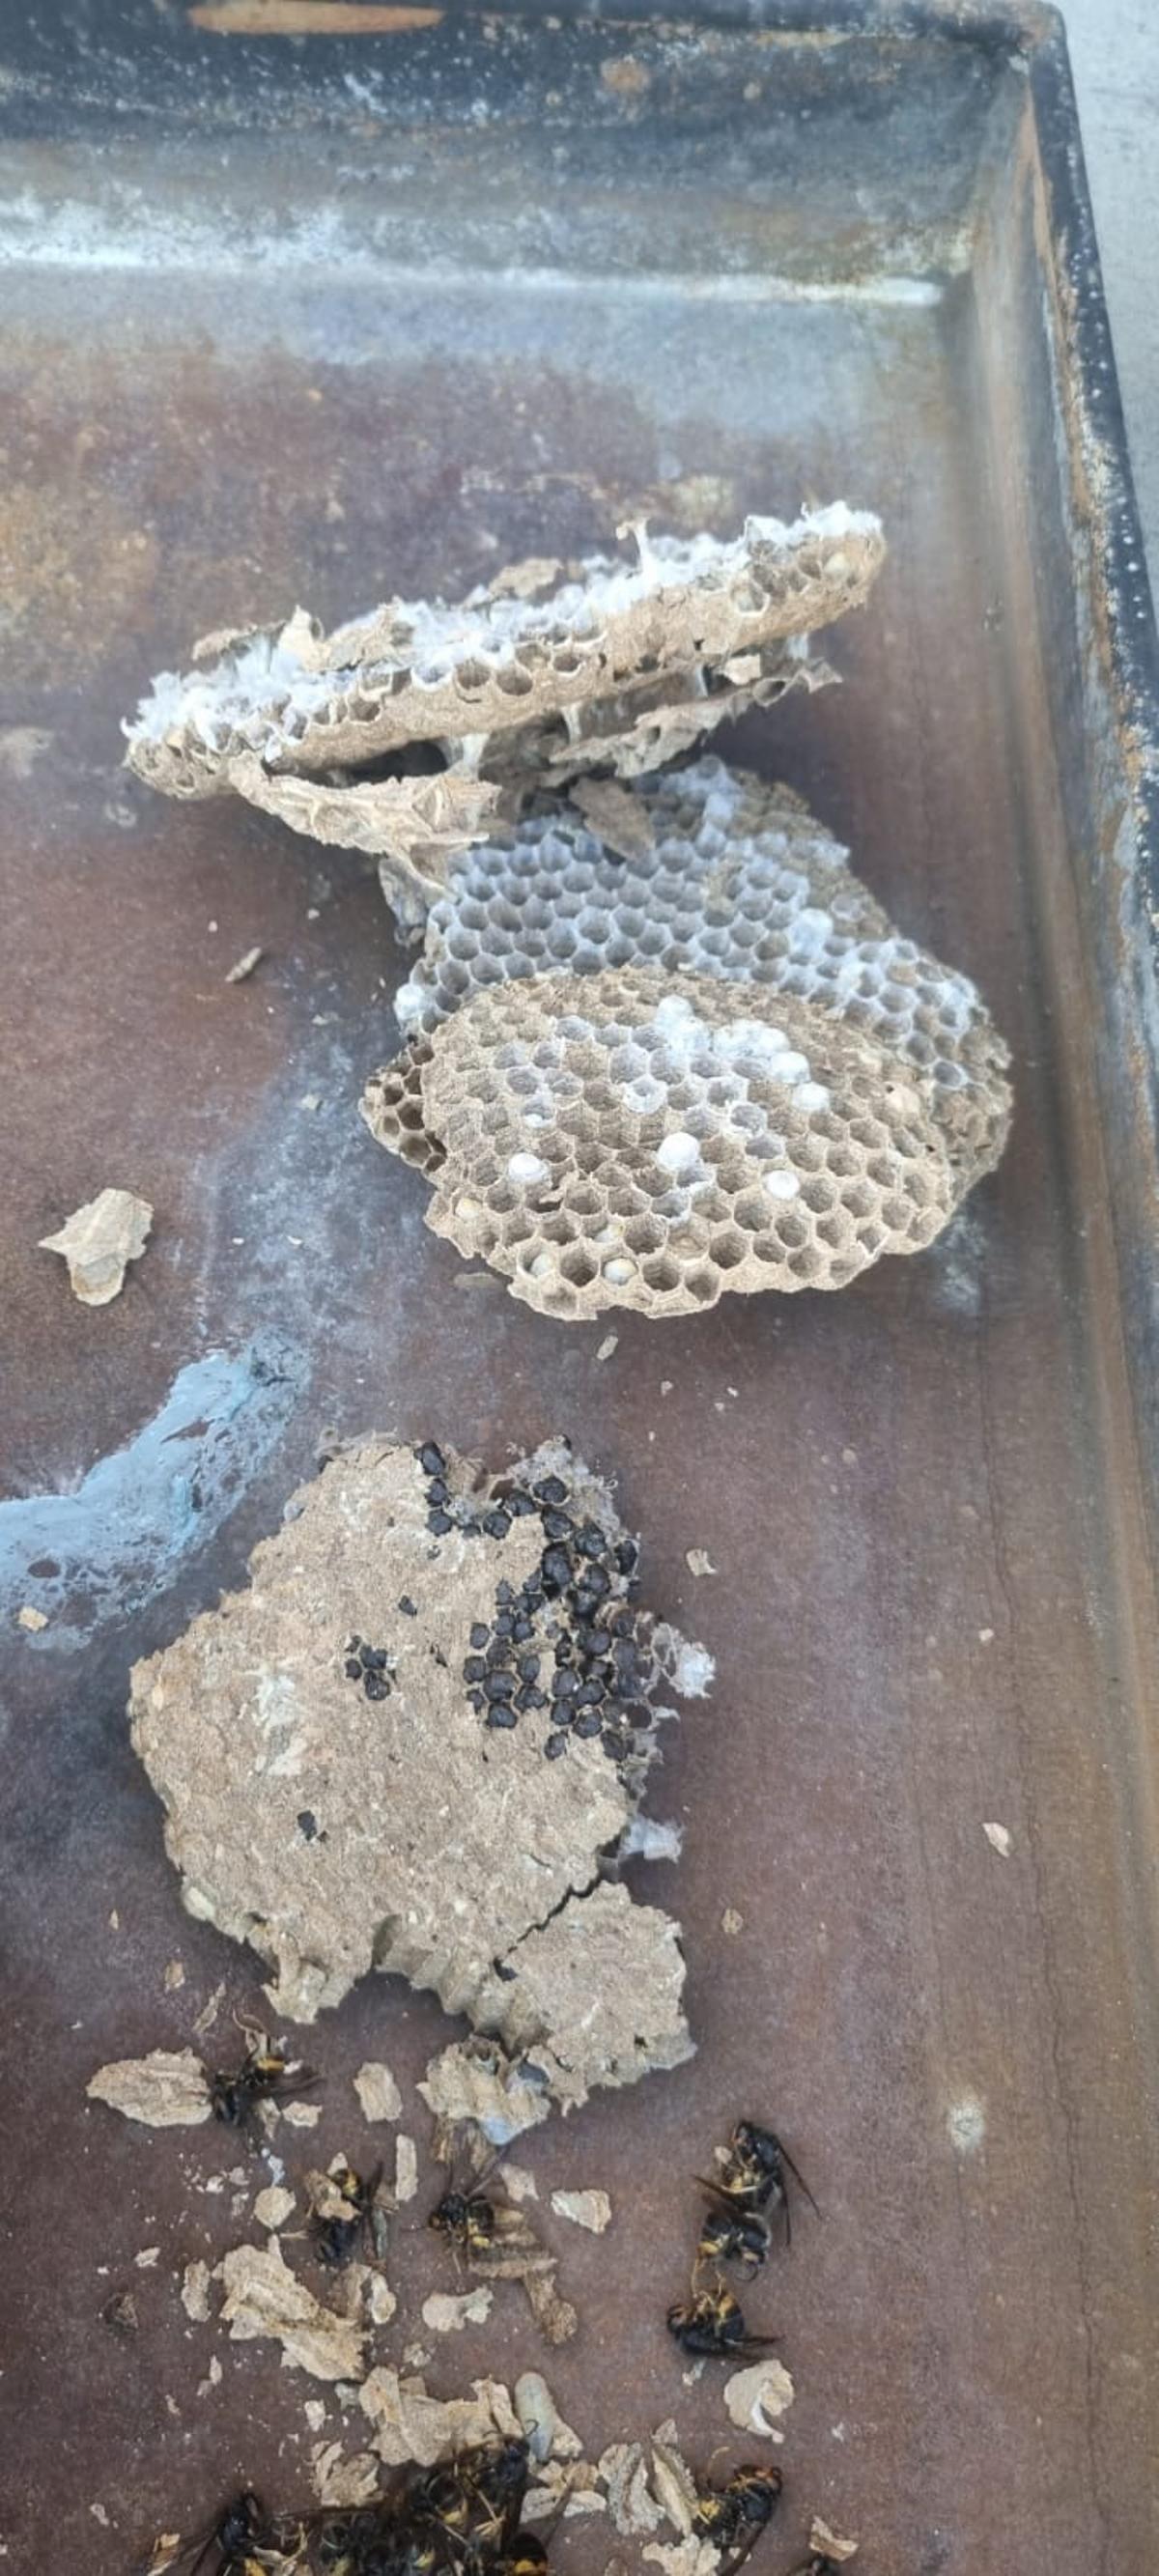 Nido de avispa asiática encontrado en Villabrázaro